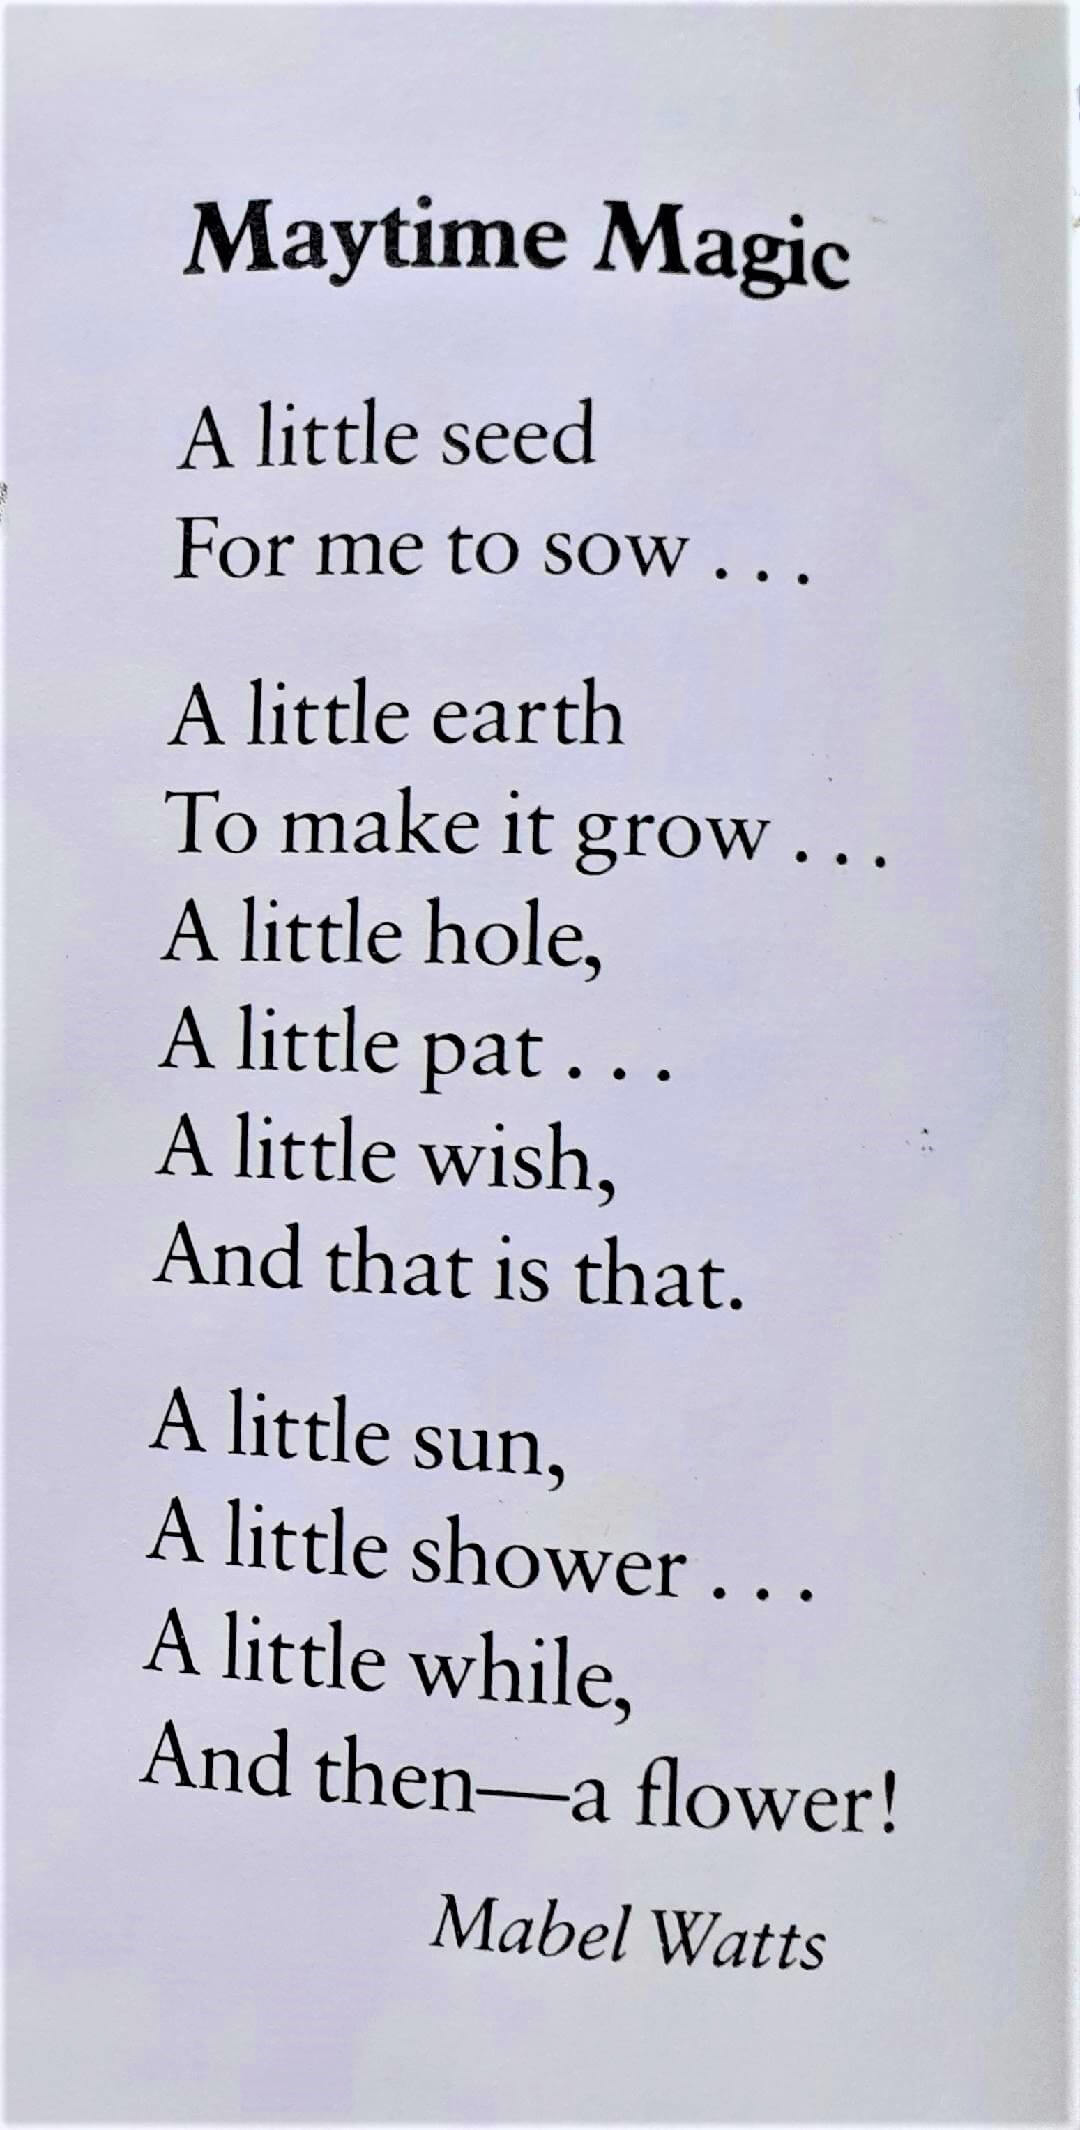 Maytime Magic poem